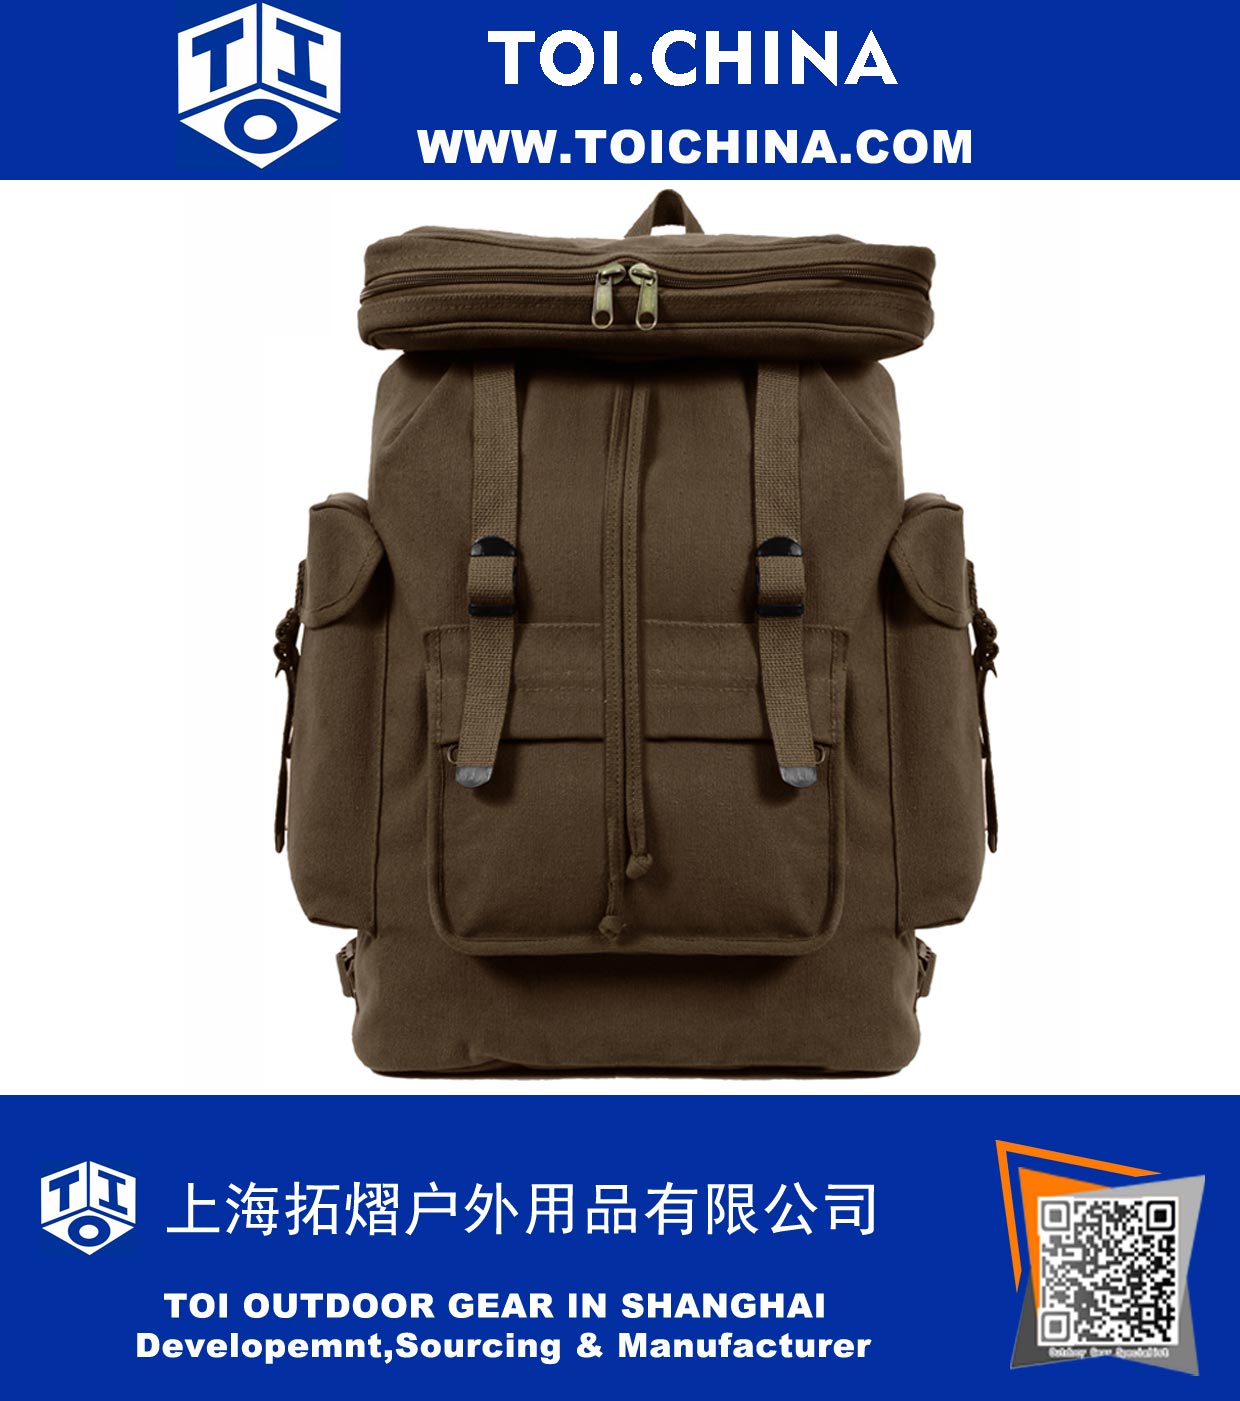 European Style Rucksack Backpack